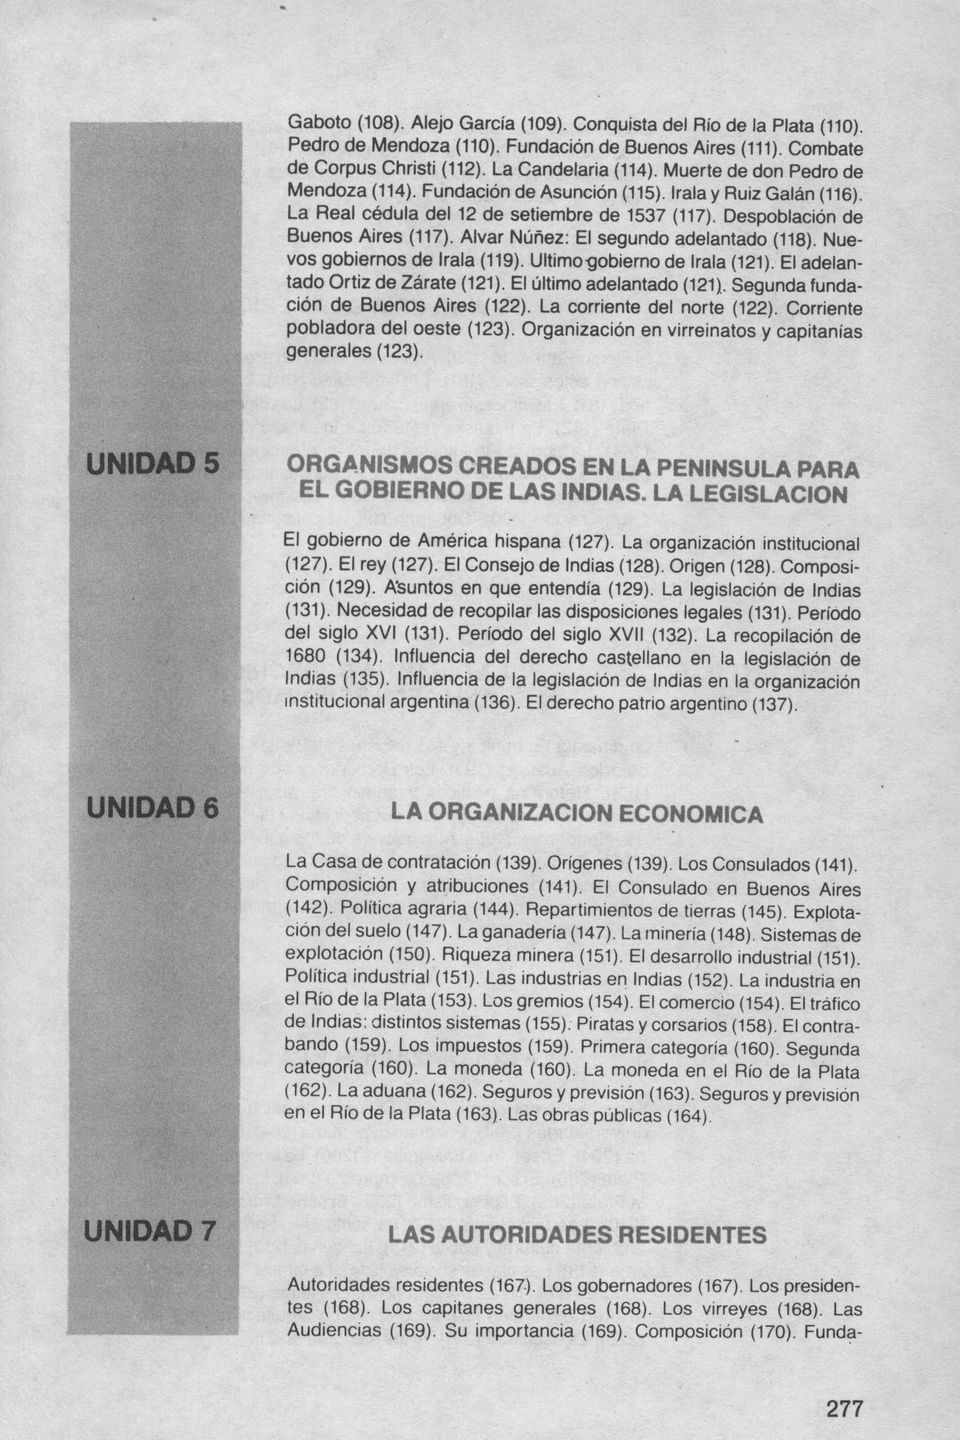 Alvar Nunez: EI segundo adelantado (118). Nuevos gobiernos de Irala (119). Ultimo-gobierno de Irala (121). EI adelantado Ortiz de Zarate (121). EI ultimo adelantado (121).